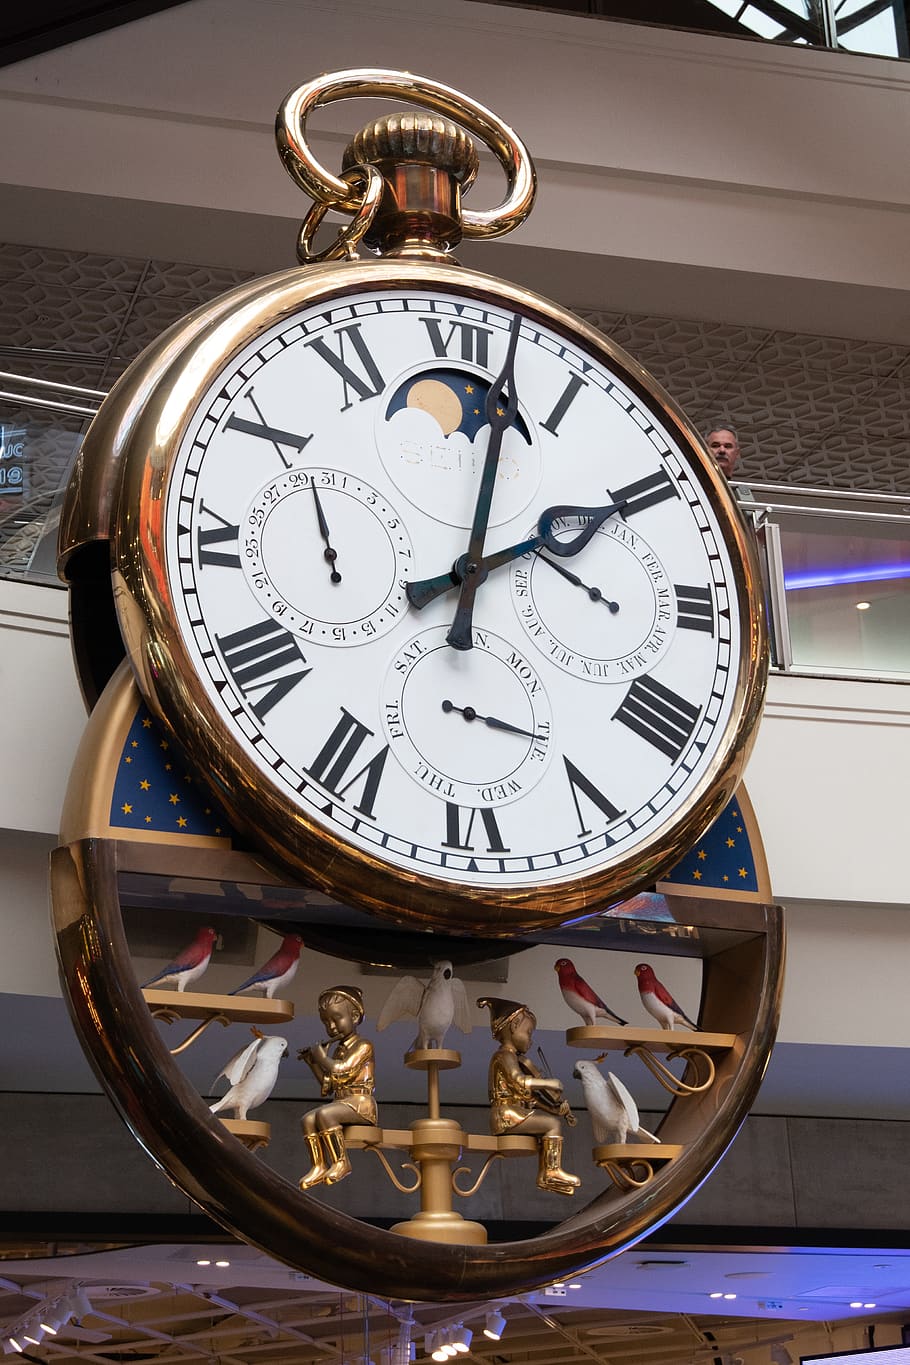 relógio, tempo, gigante, melbourne central, icônico, turístico, relógio relógio de bolso, ouro, número, instrumento de tempo